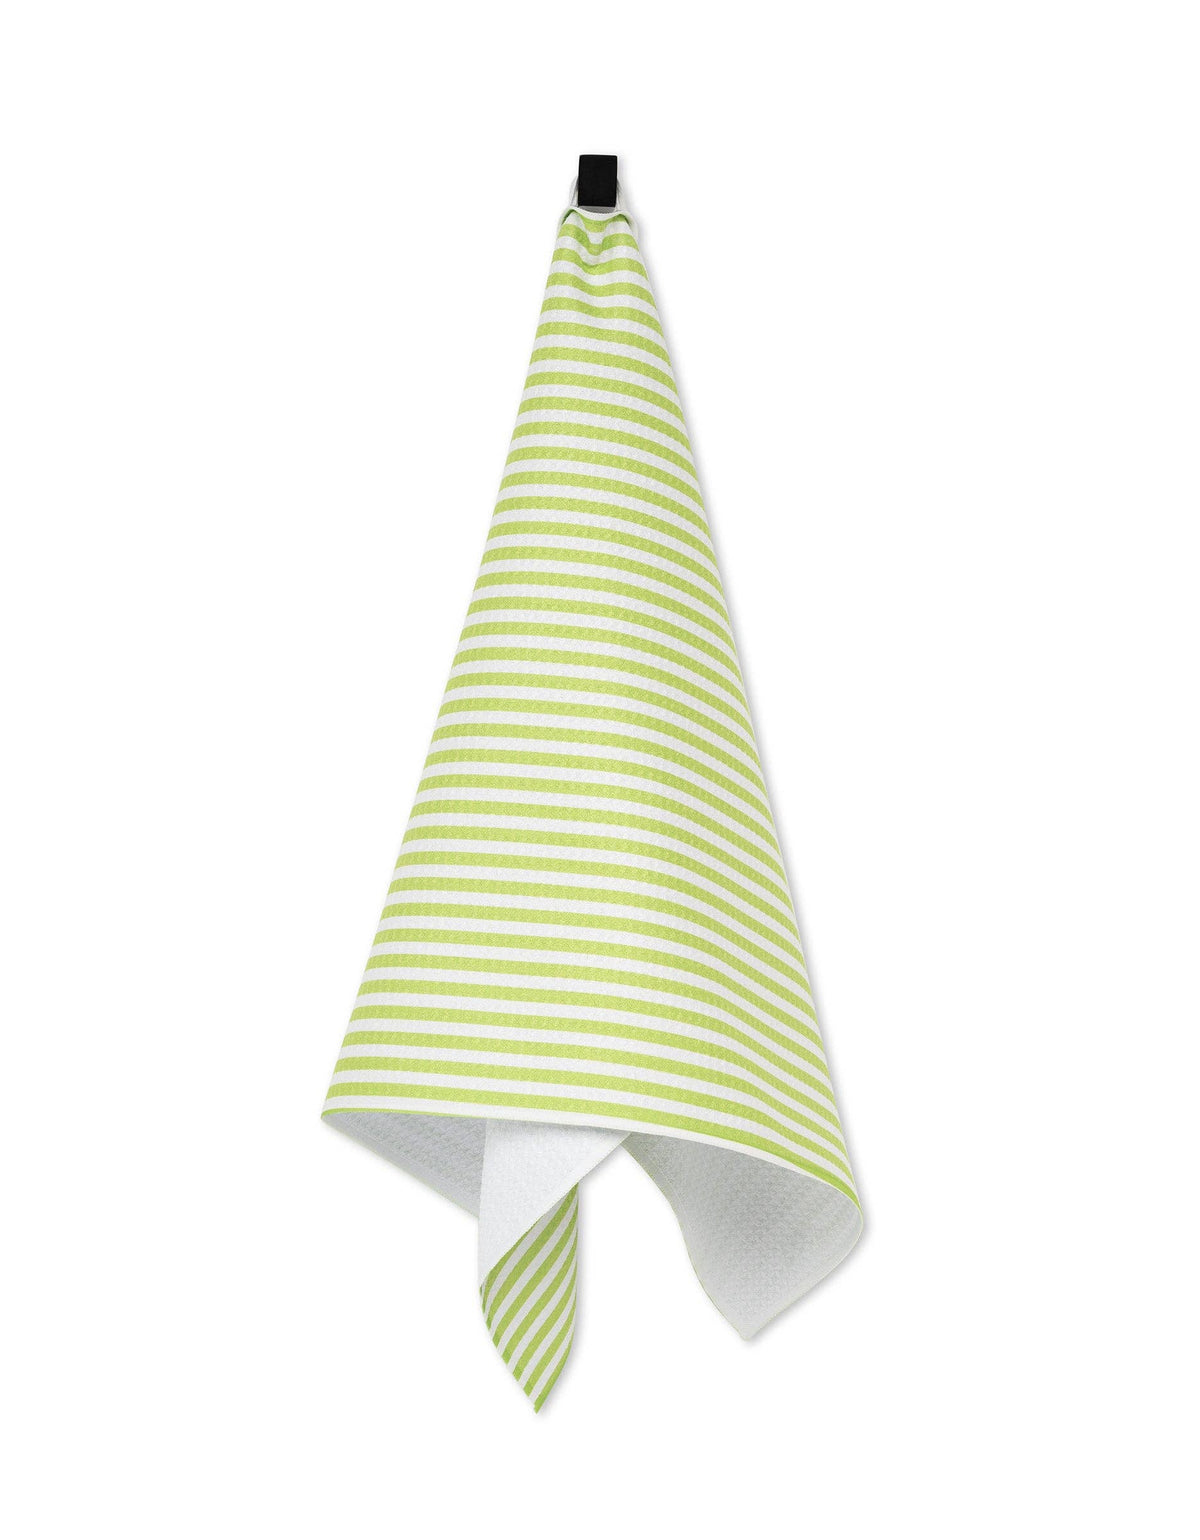 Stripe Green Geometry Tea Towel - The Preppy Bunny